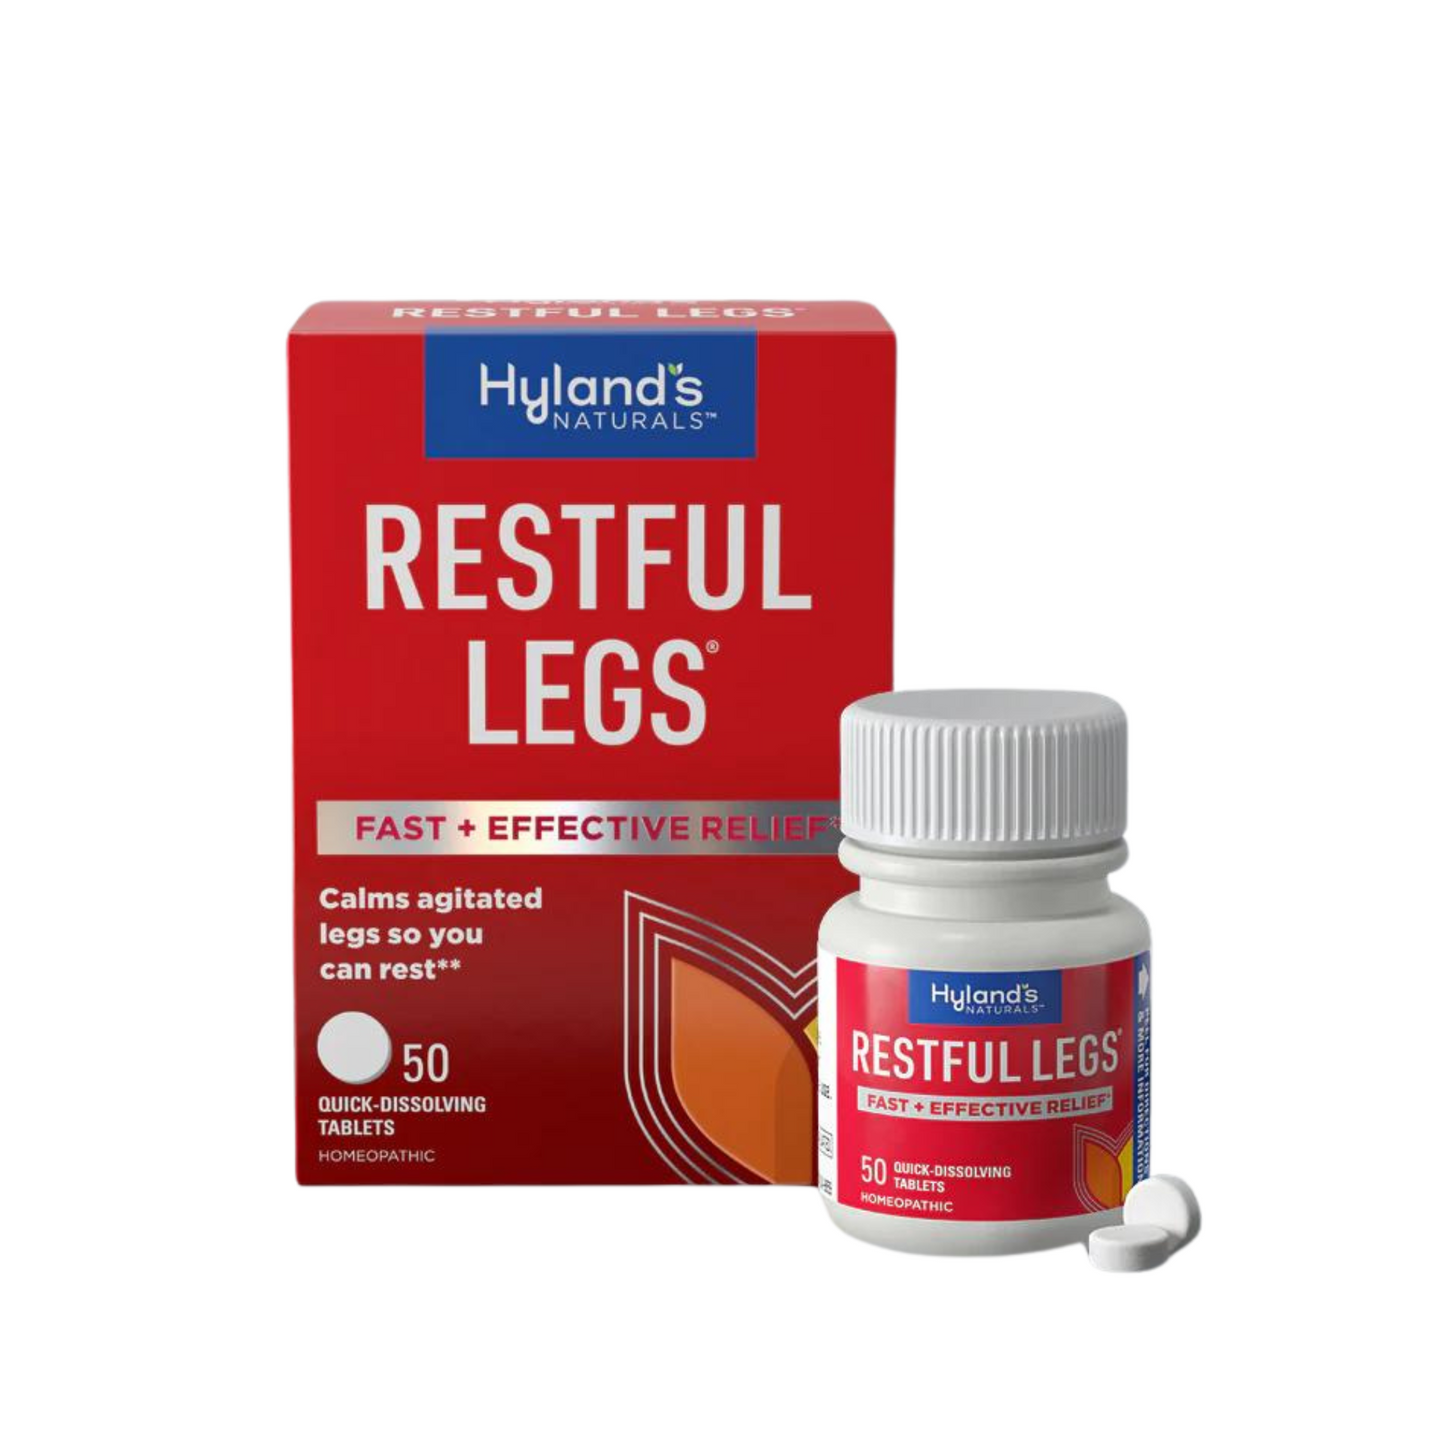 Primary Image of Restful Legs - Hylands Restless Legs